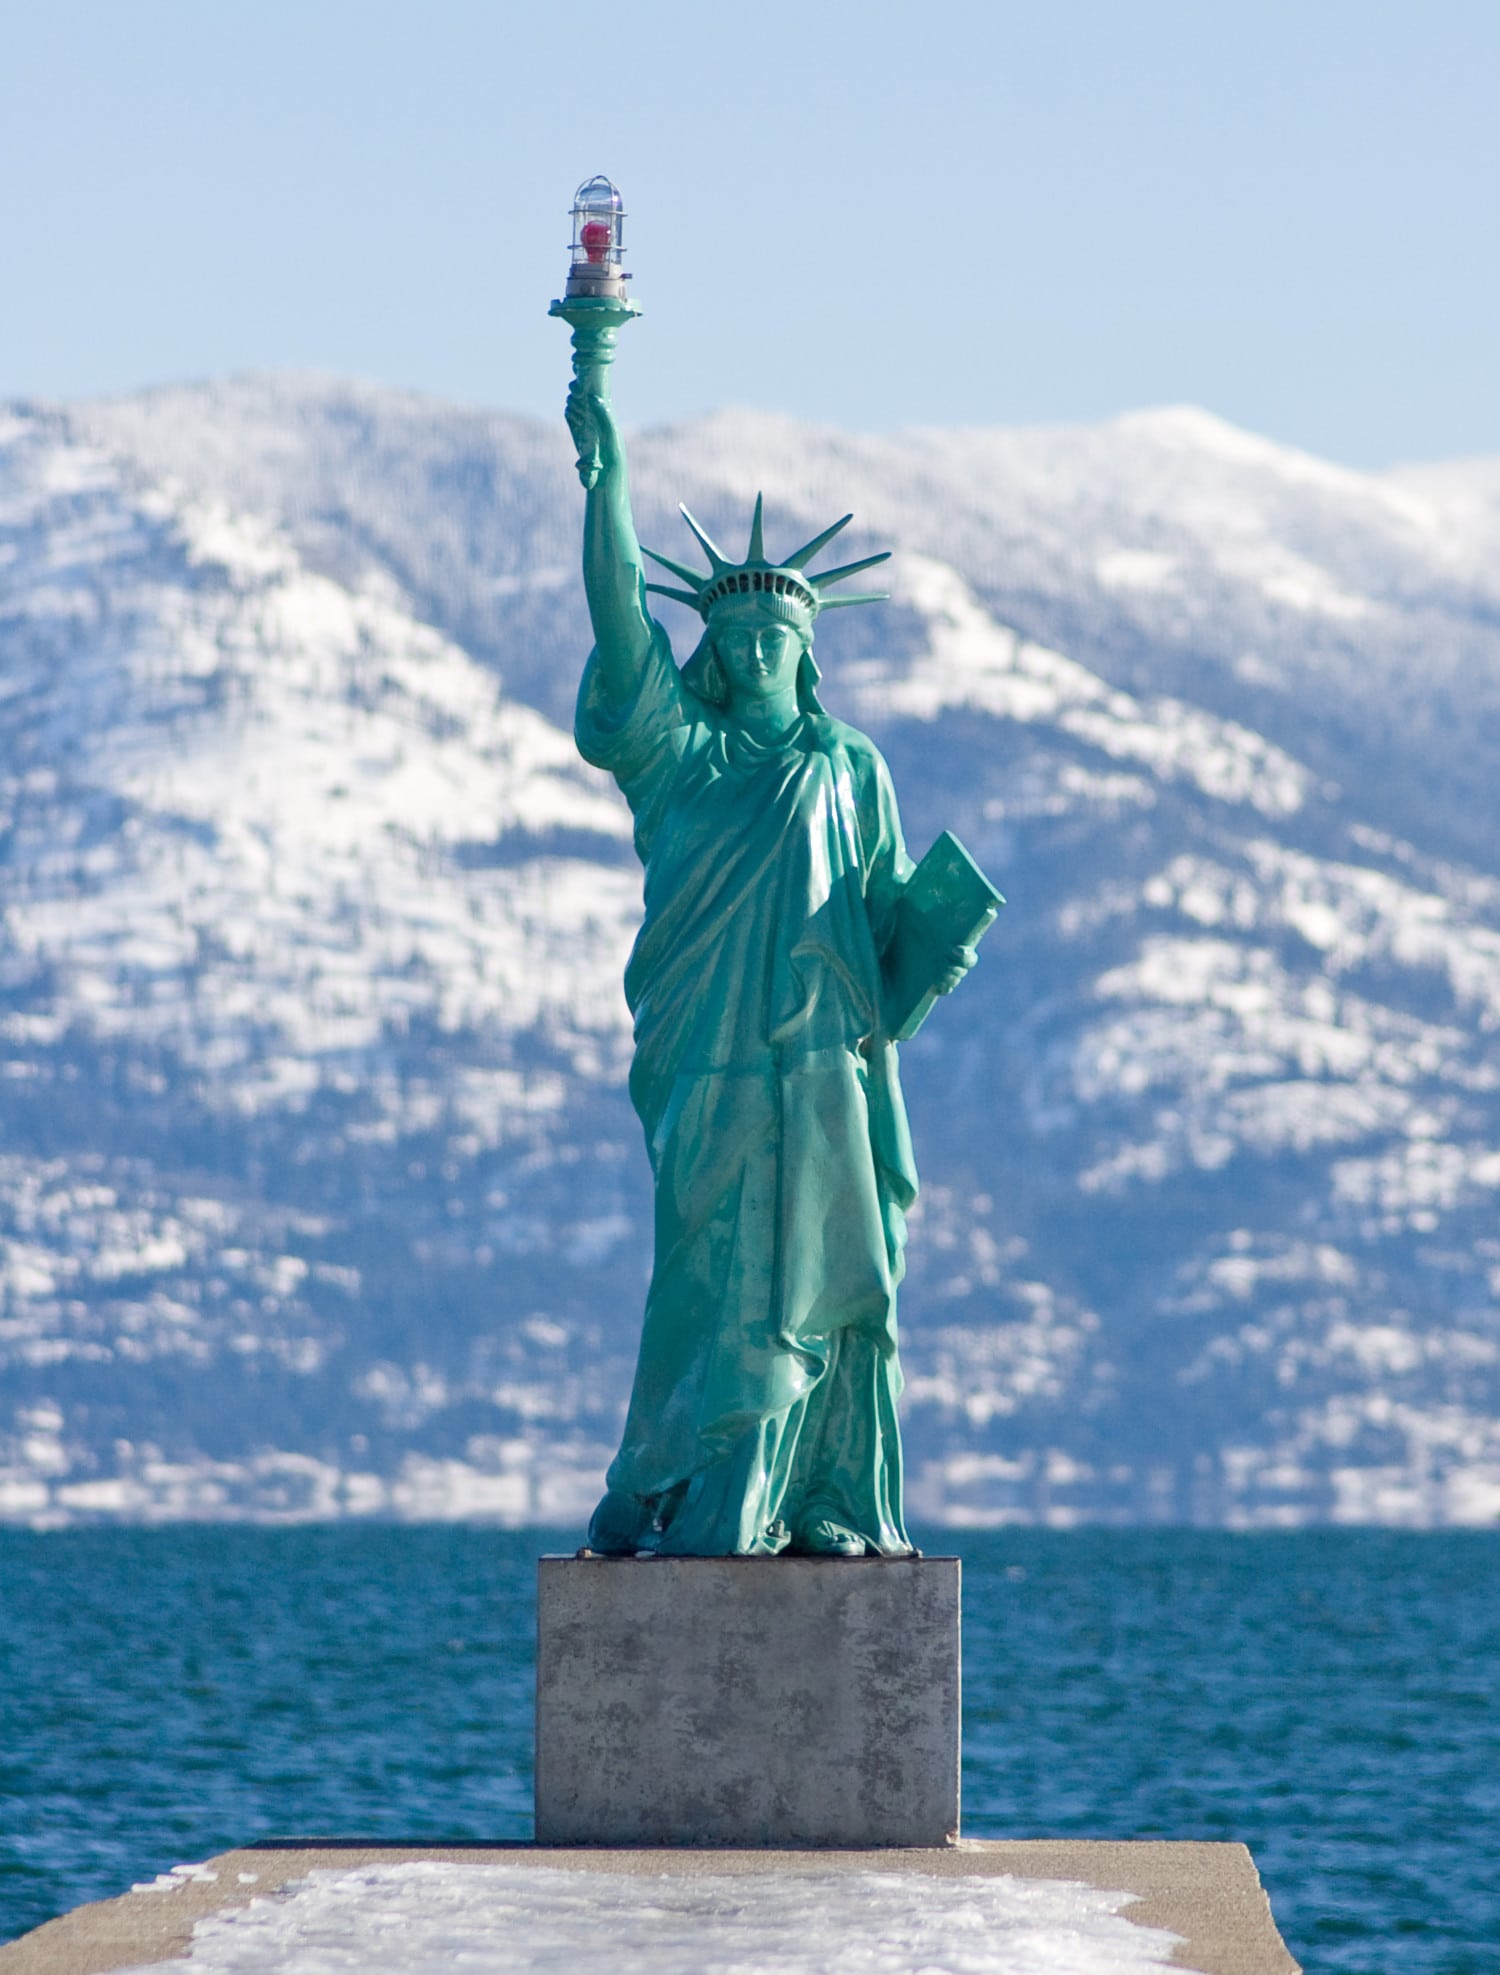 Sandpoint, Idaho has a Statue of Liberty replica